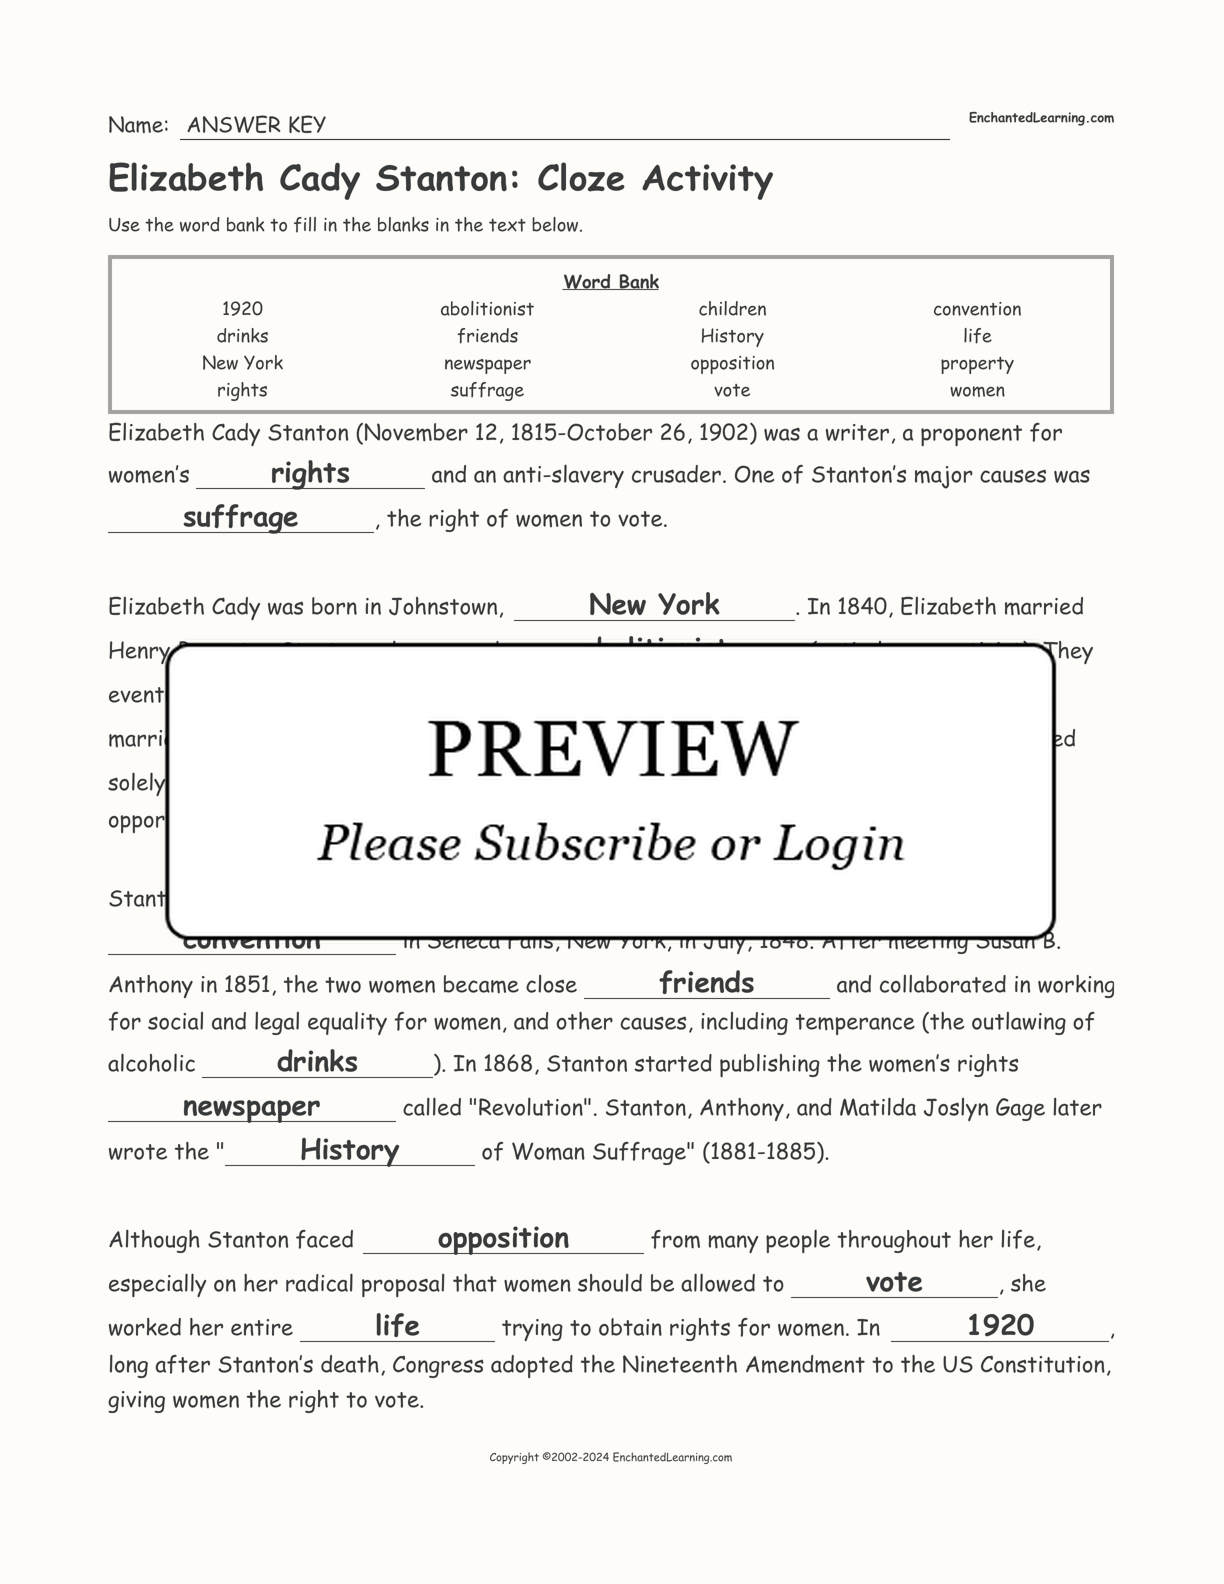 Elizabeth Cady Stanton: Cloze Activity interactive worksheet page 2